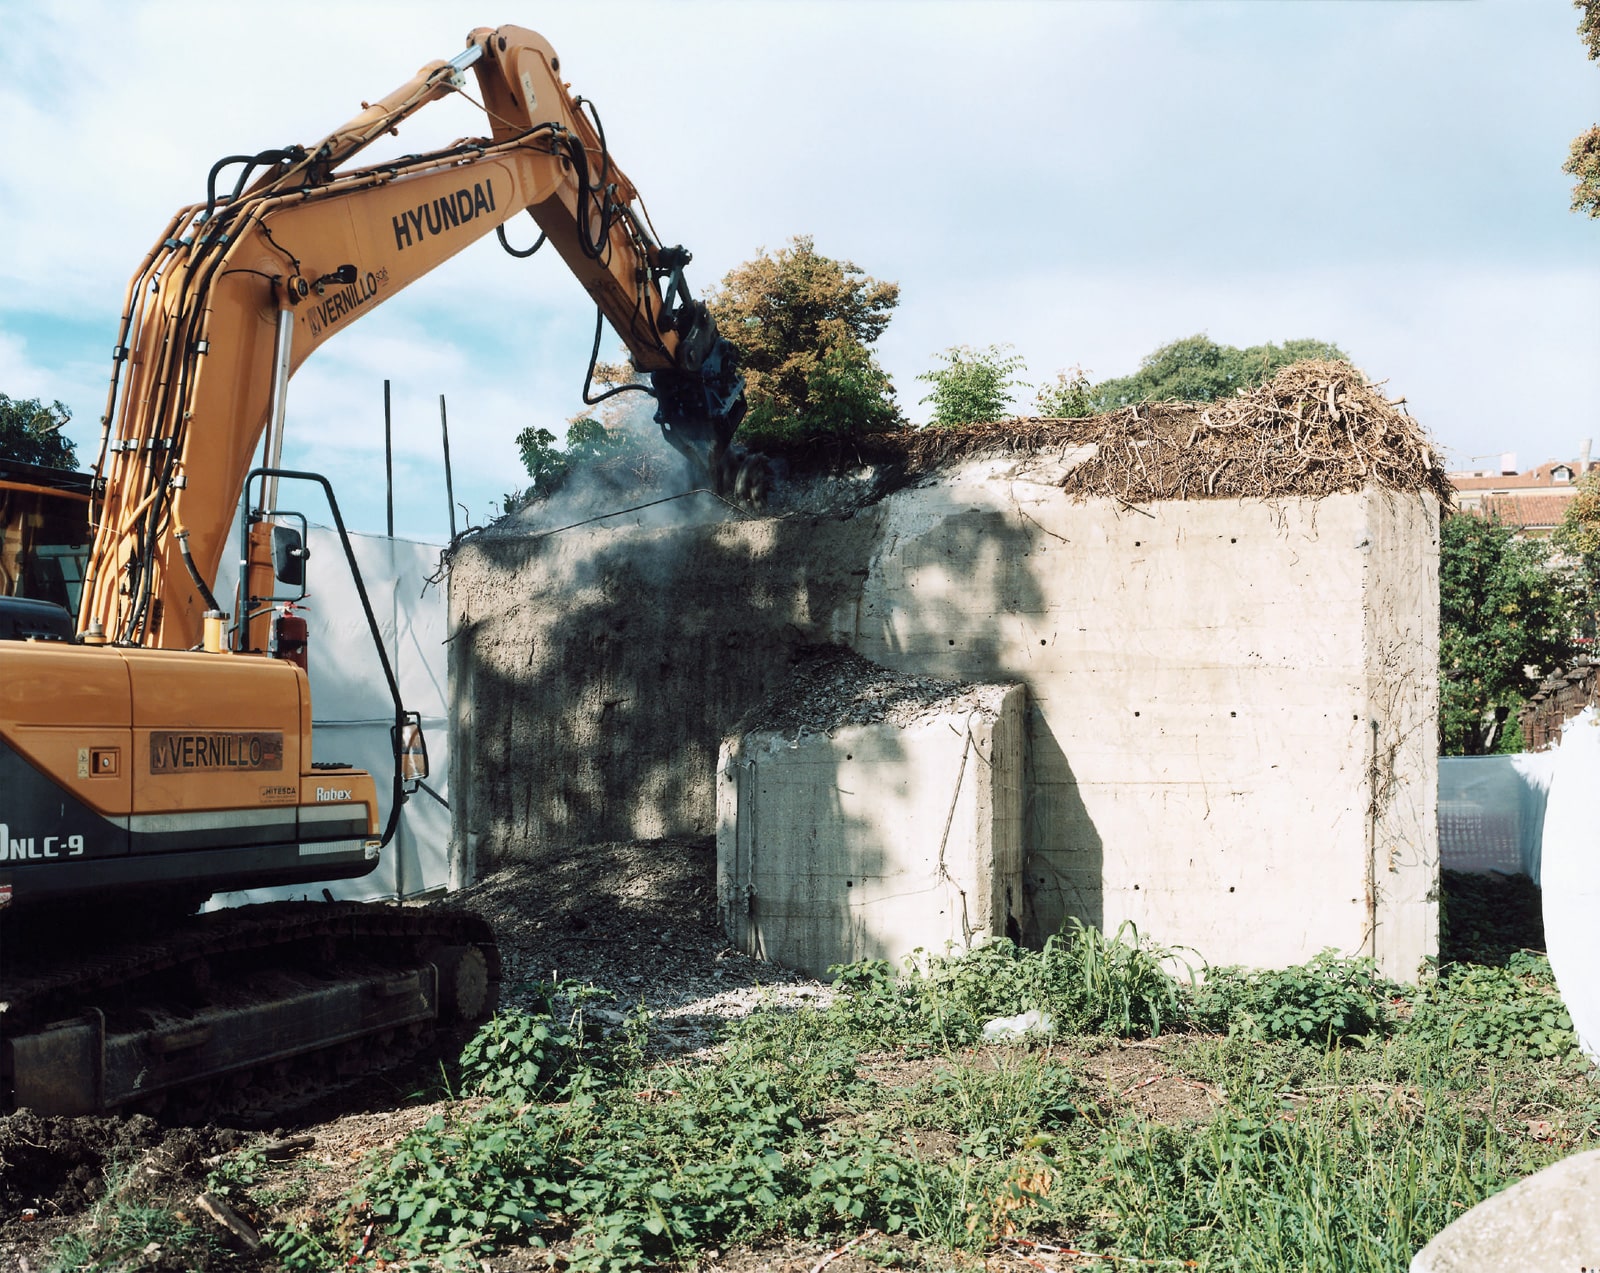 Francesco Neri, Royal Gardens, bunker being pulled down, 2019